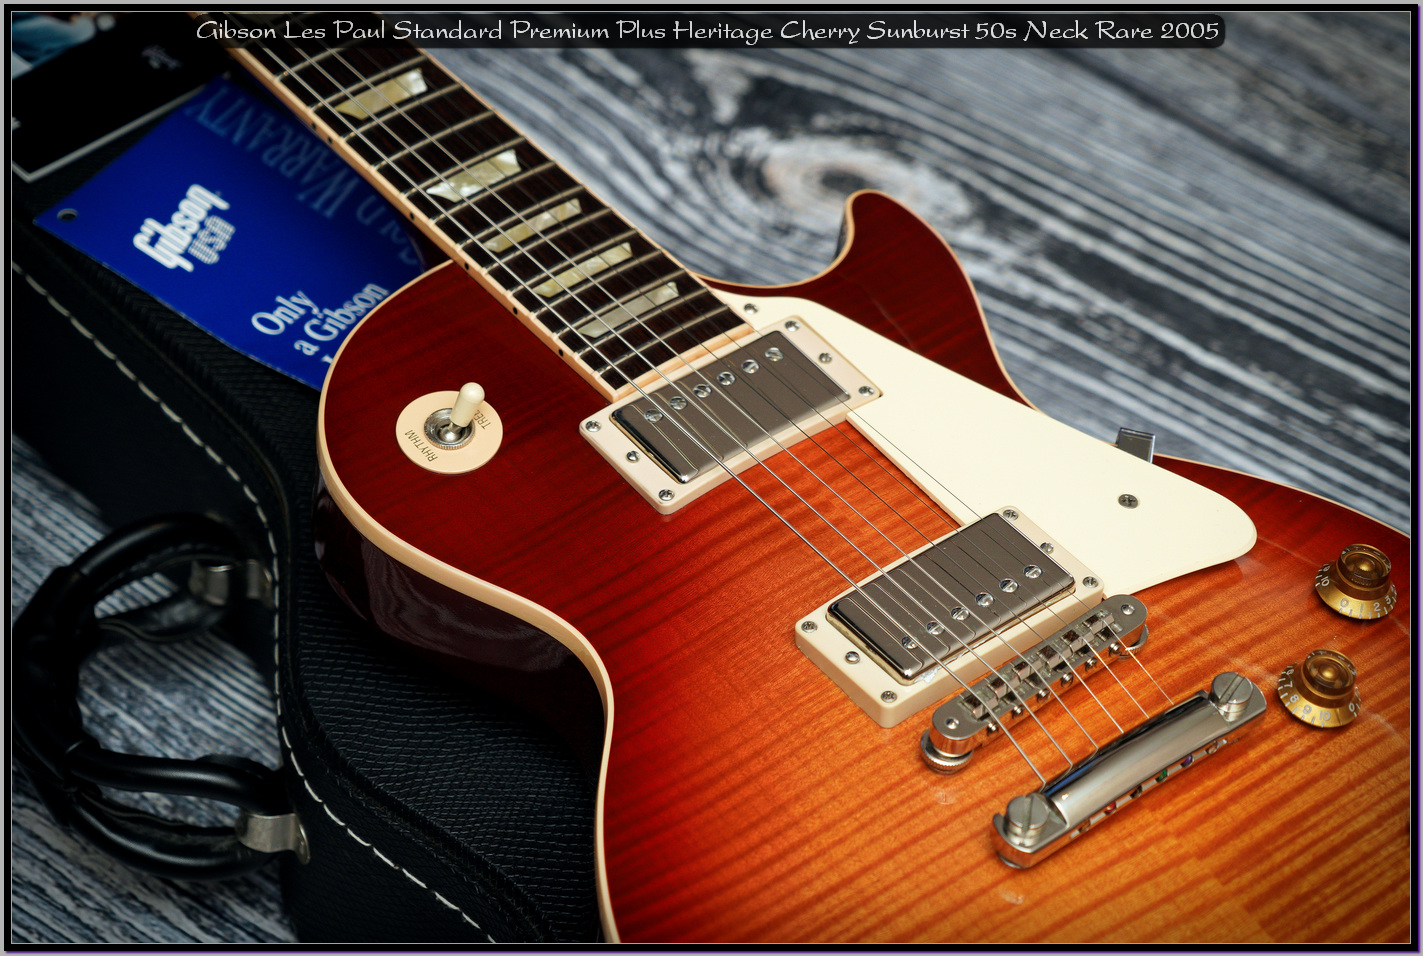 Gibson Les Paul Standard Premium Plus Heritage Cherry Sunburst 50s Neck Rare 2005 04_x1440.jpg